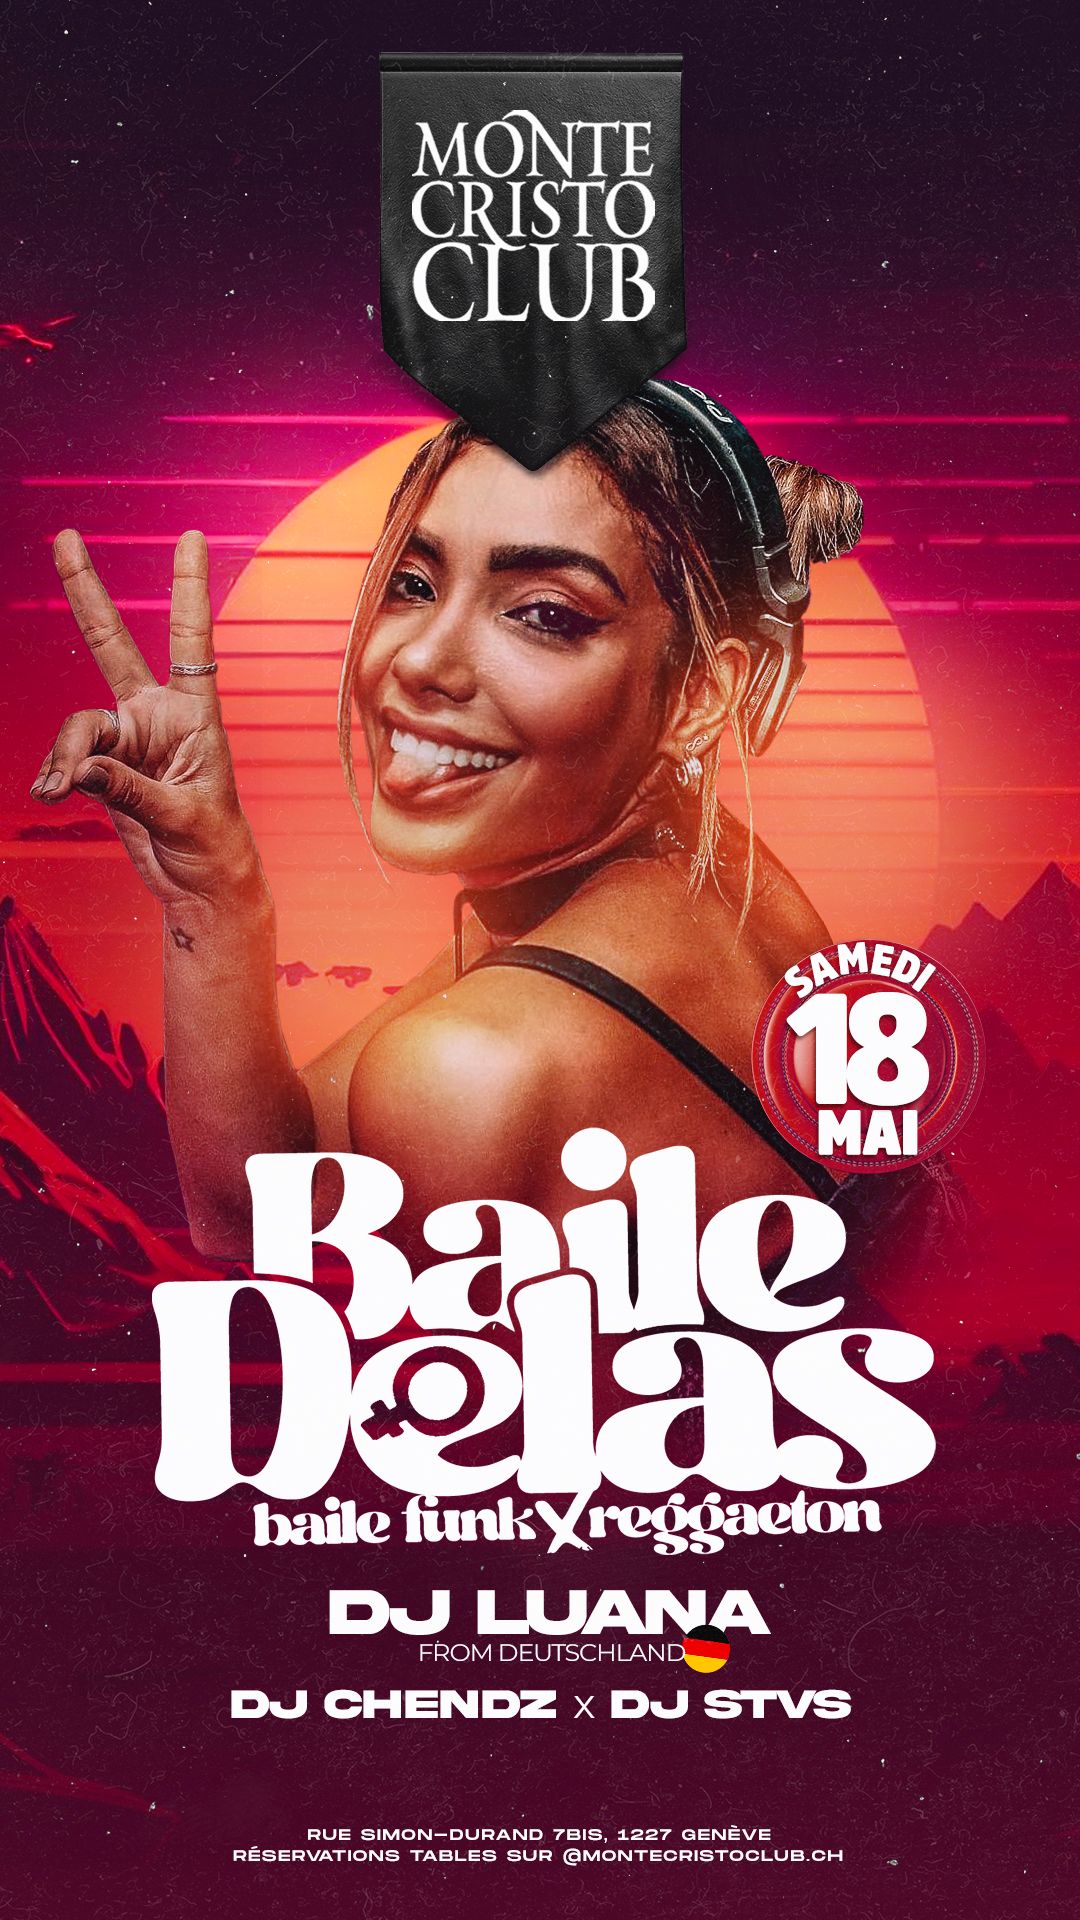 Baile Delas - DJ LUANA (DEUTCHLAND)